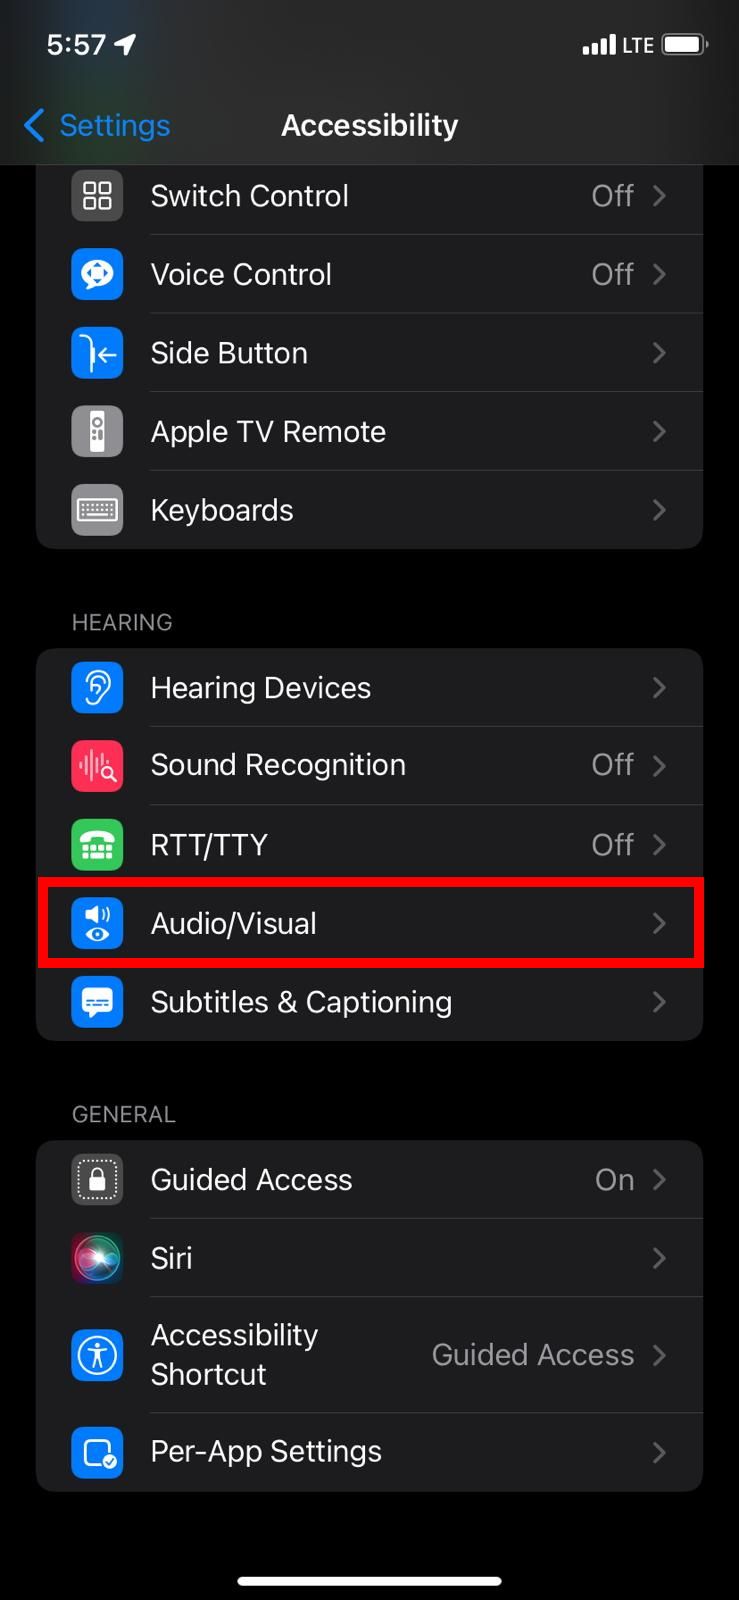 screen displaying Audio/Visual settings in iPhone